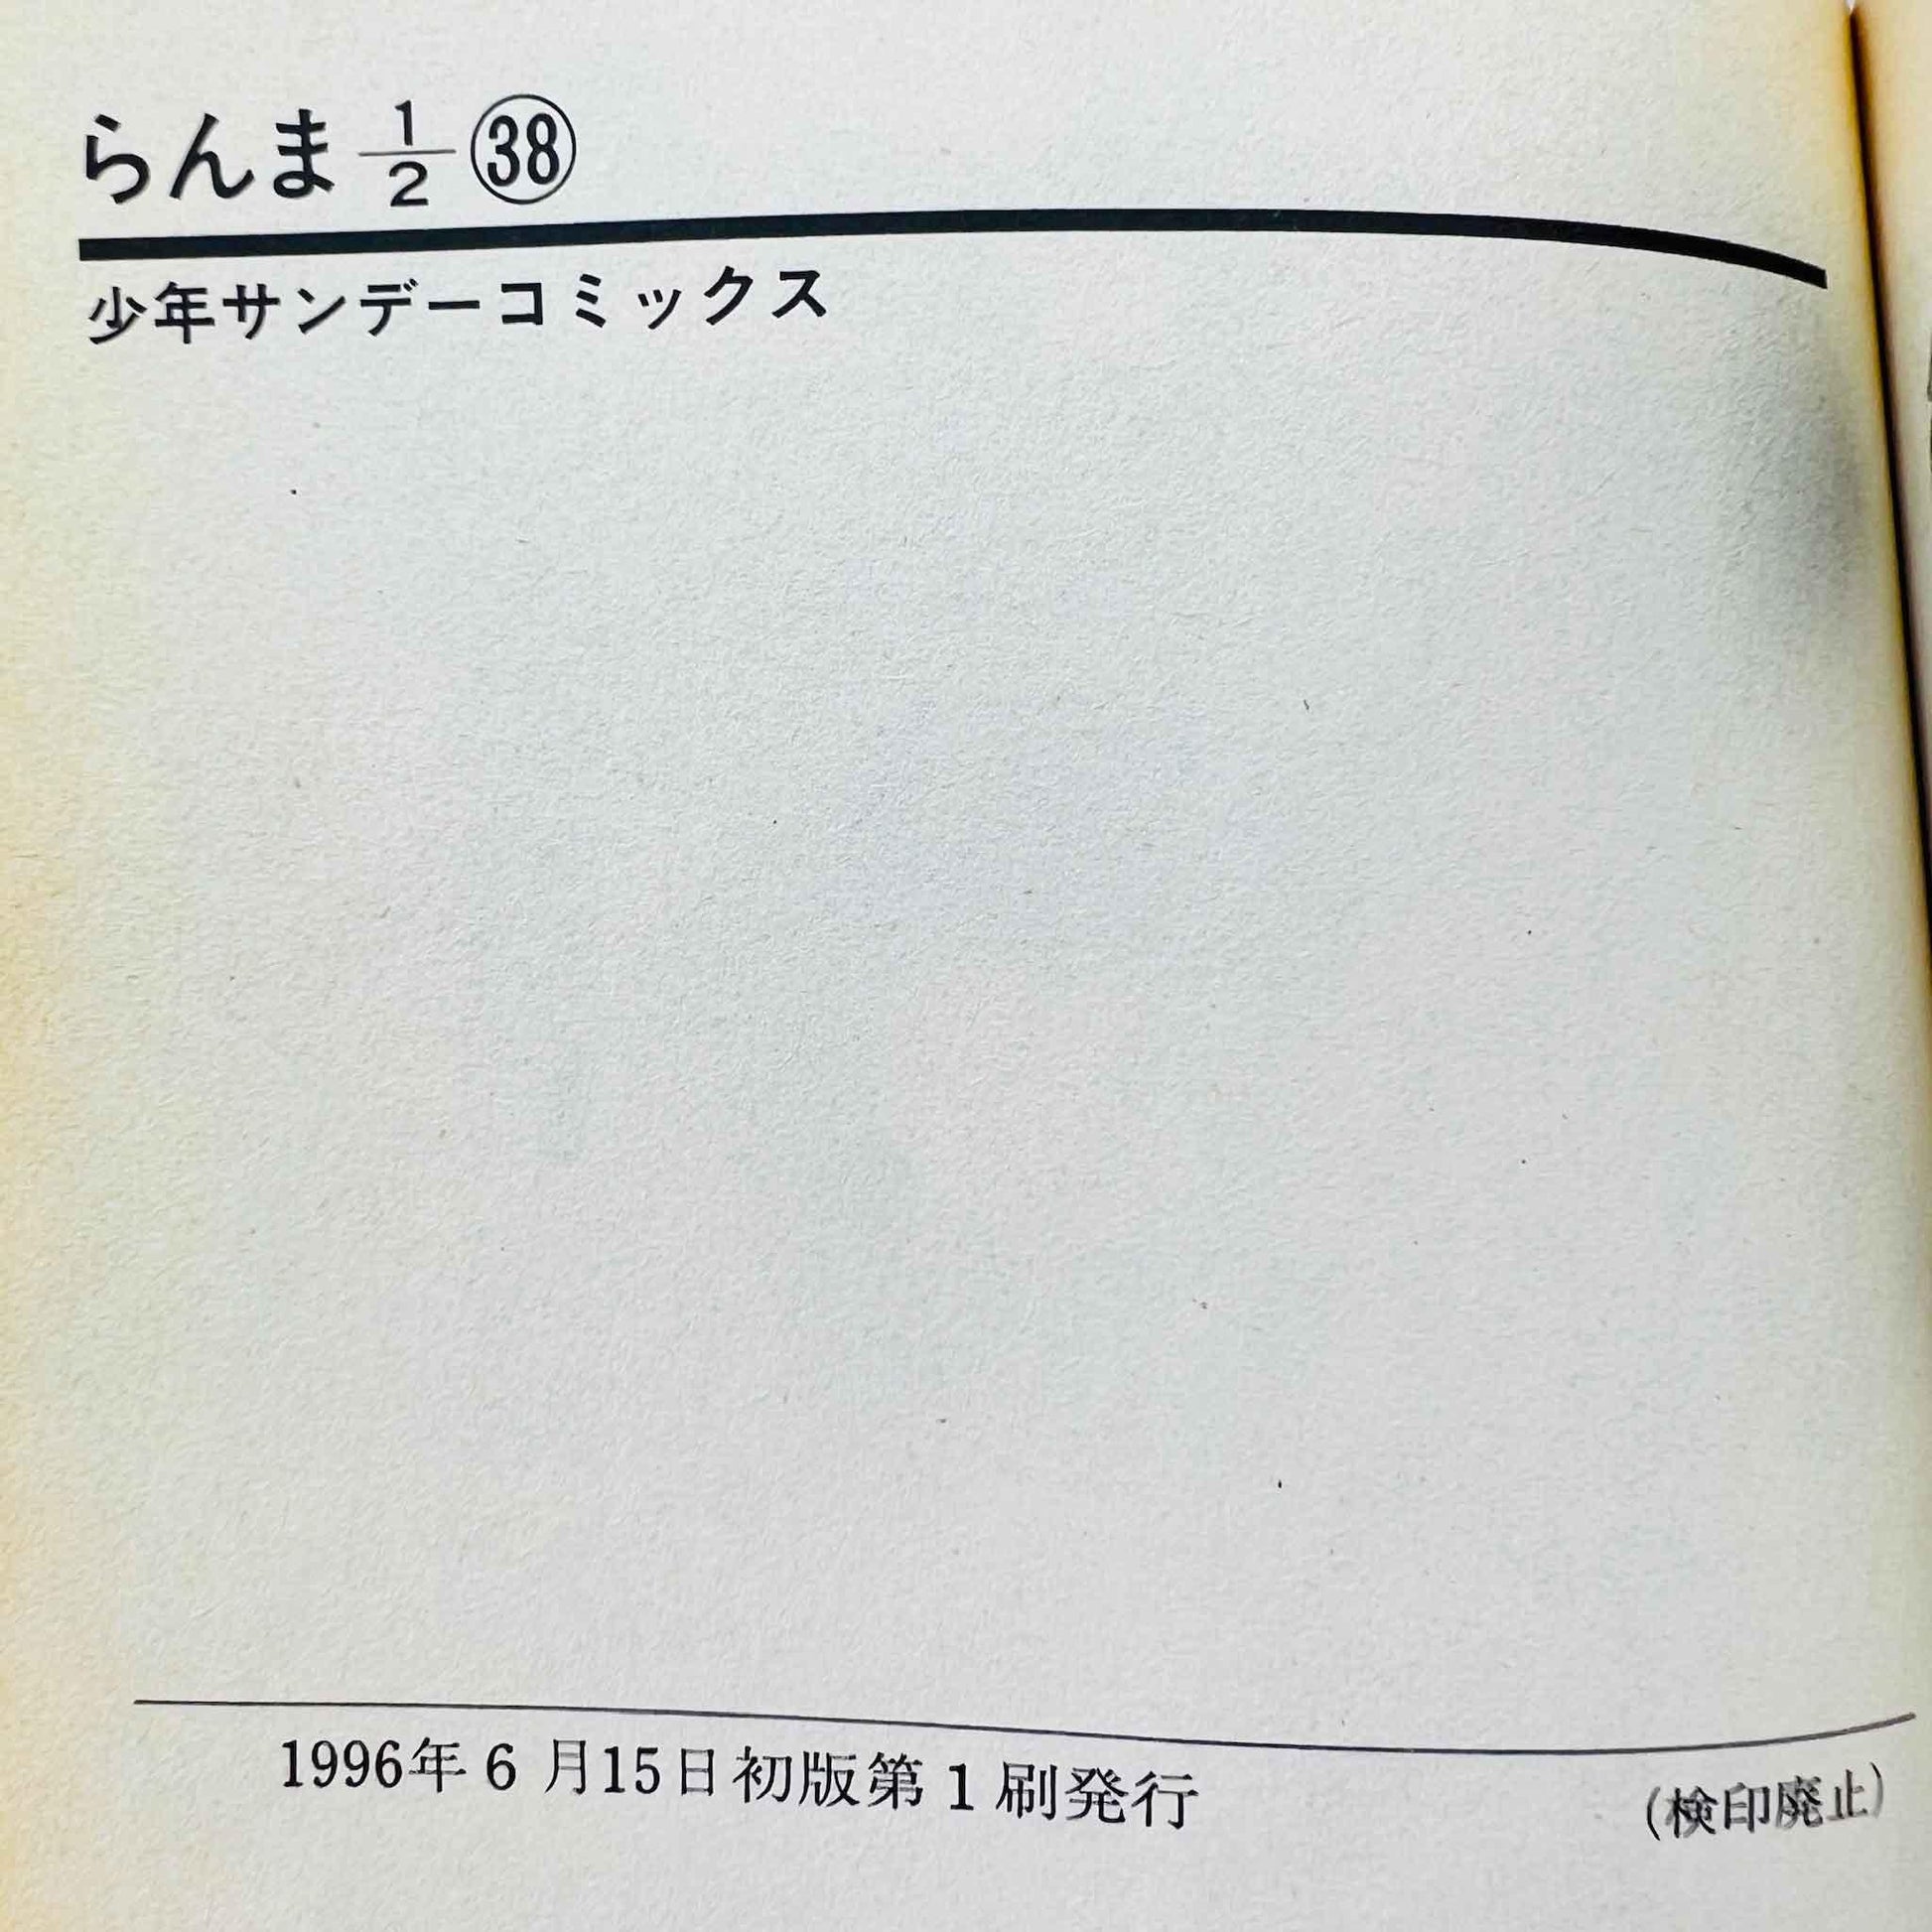 Ranma ½ - Volume 38 - 1stPrint.net - 1st First Print Edition Manga Store - M-RANMA-38-001